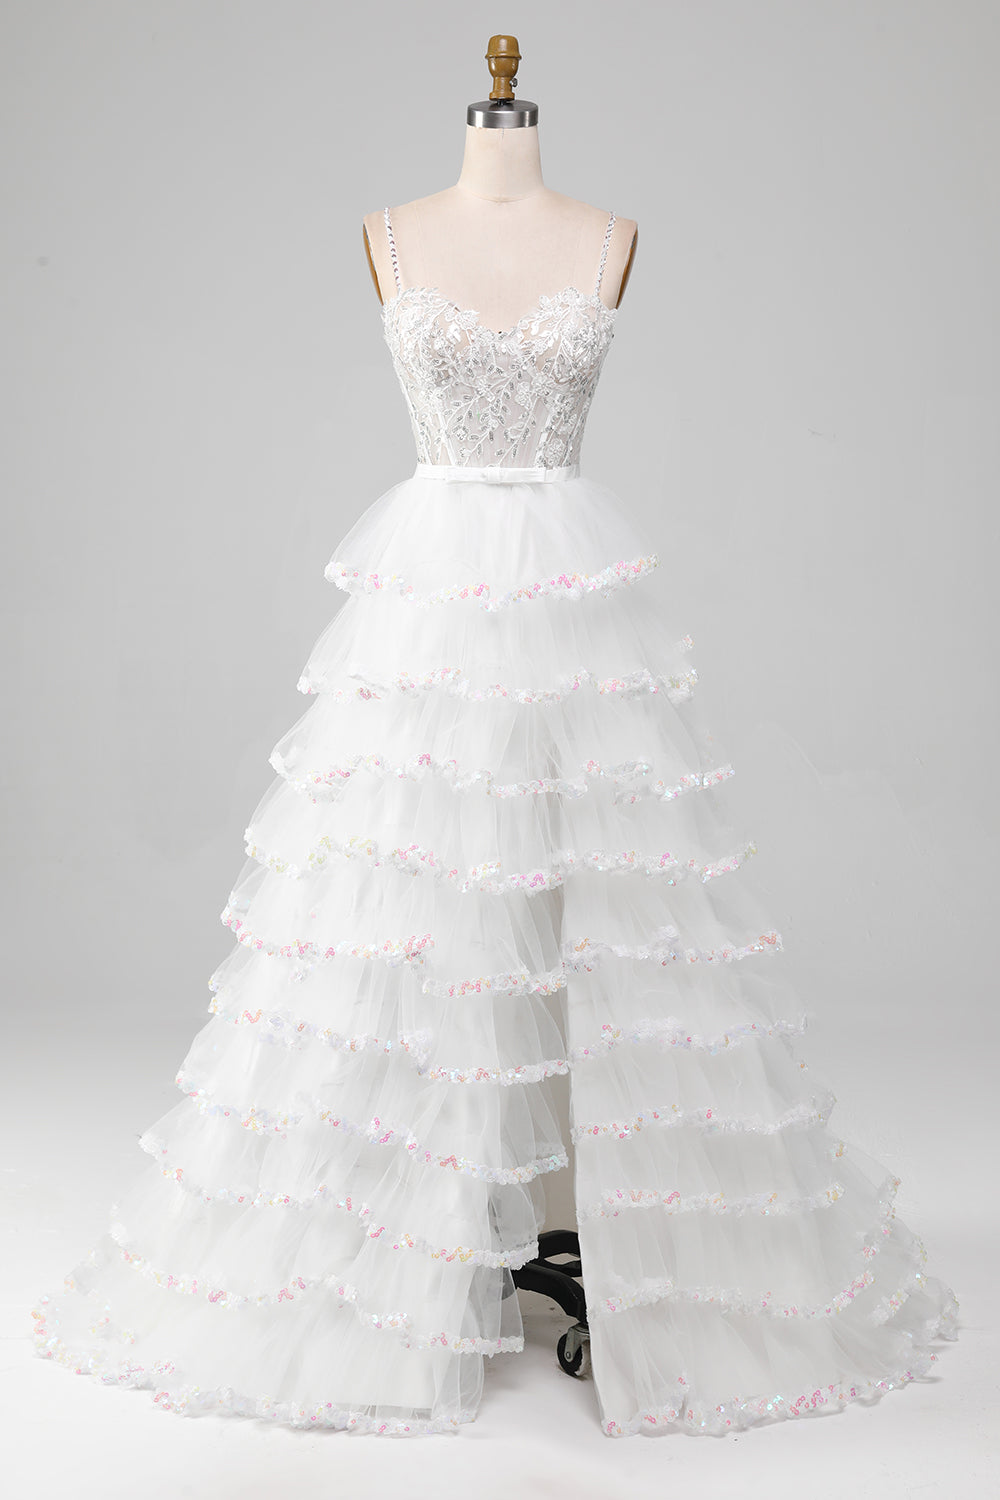 Vit A-linje glittrande paljetter volang kjol korsett balklänning med slits